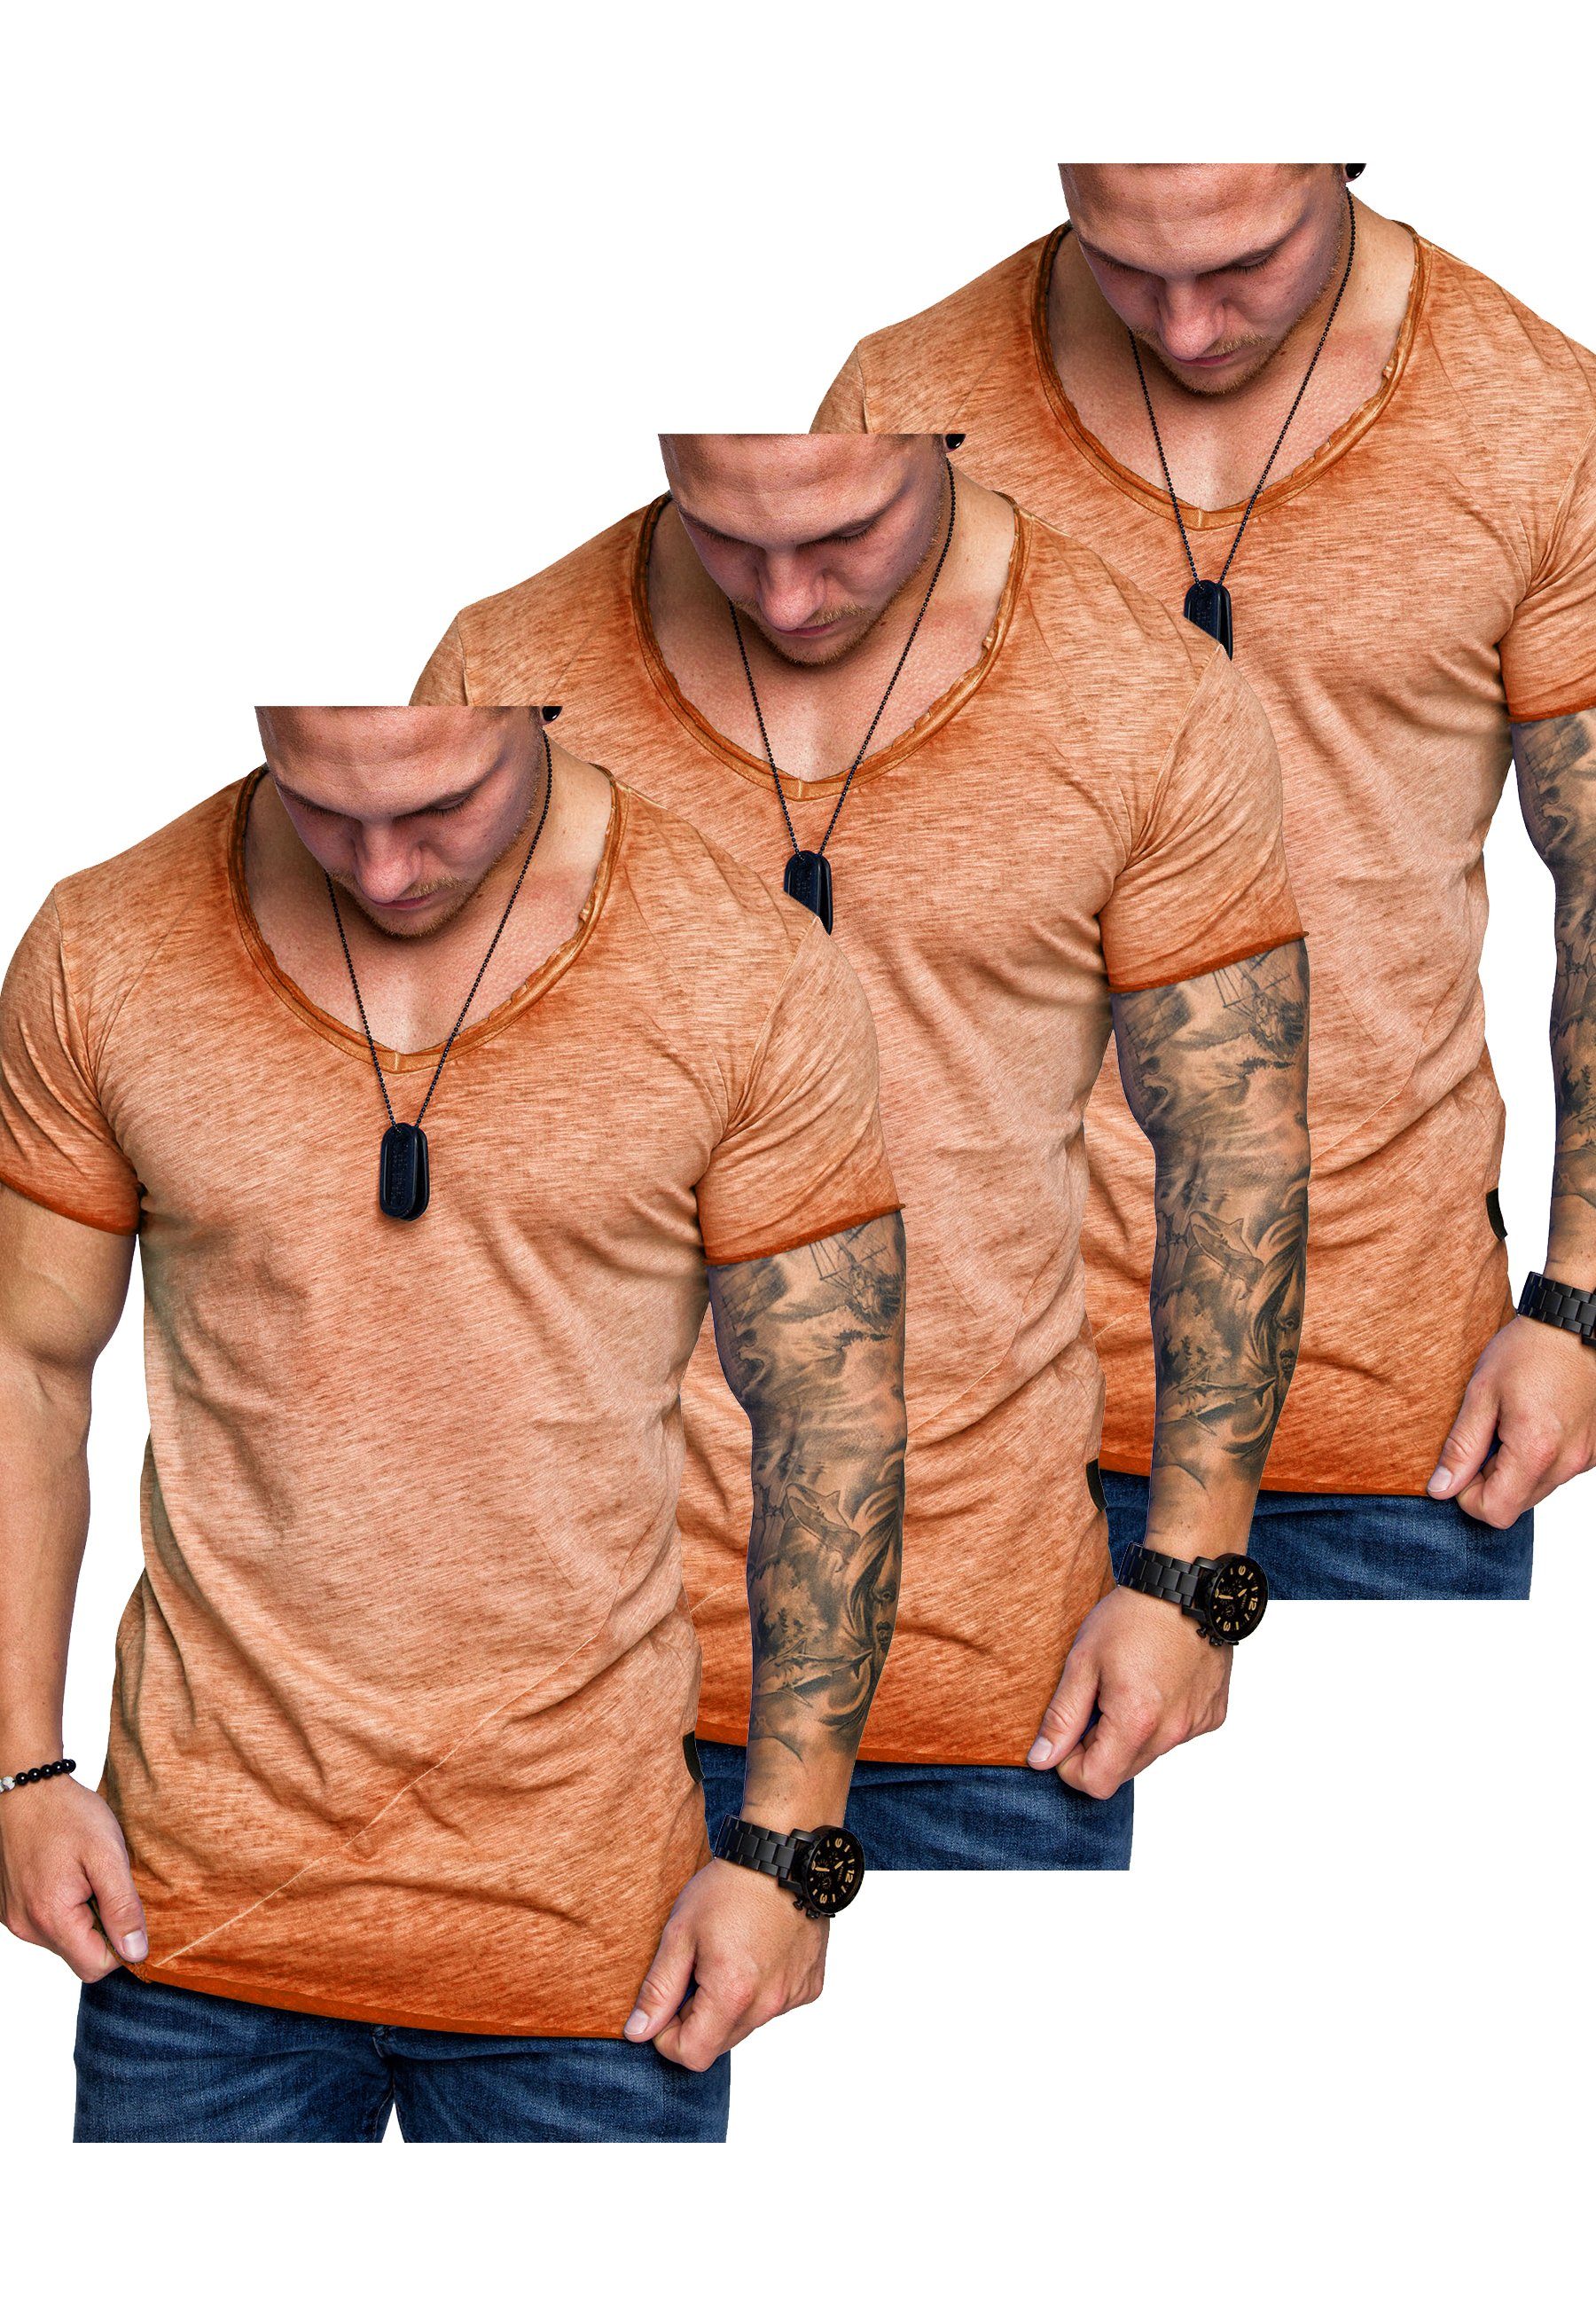 T-Shirt (3x Oversize V-Ausschnitt FRANCISCO mit T-Shirts (3er-Pack) SAN Orange) Amaci&Sons 3. T-Shirt Herren 3er-Pack Basic